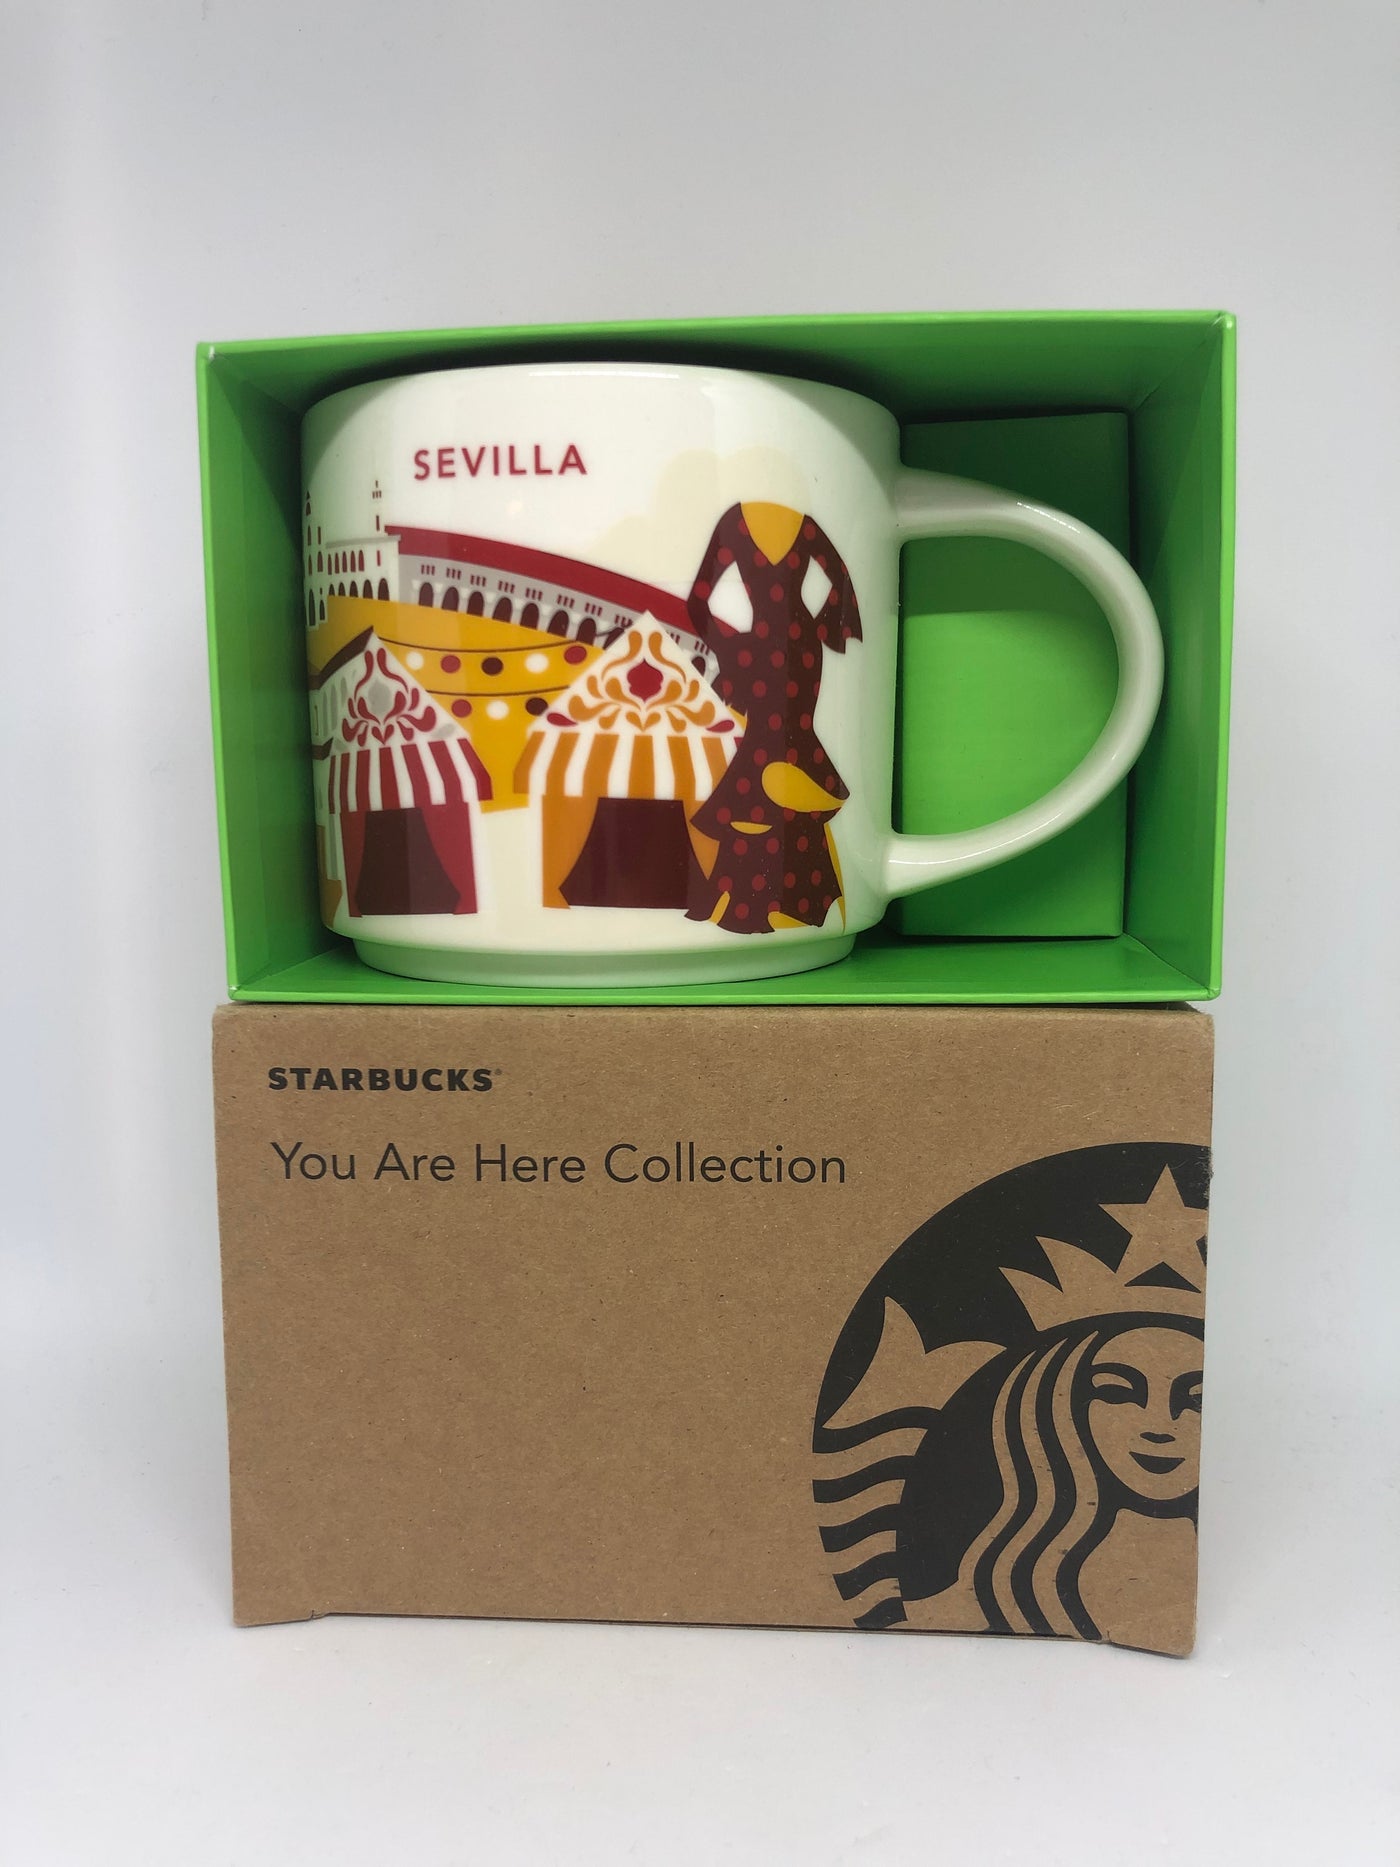 Starbucks You Are Here Collection Spain Sevilla Ceramic Coffee Mug New W Box